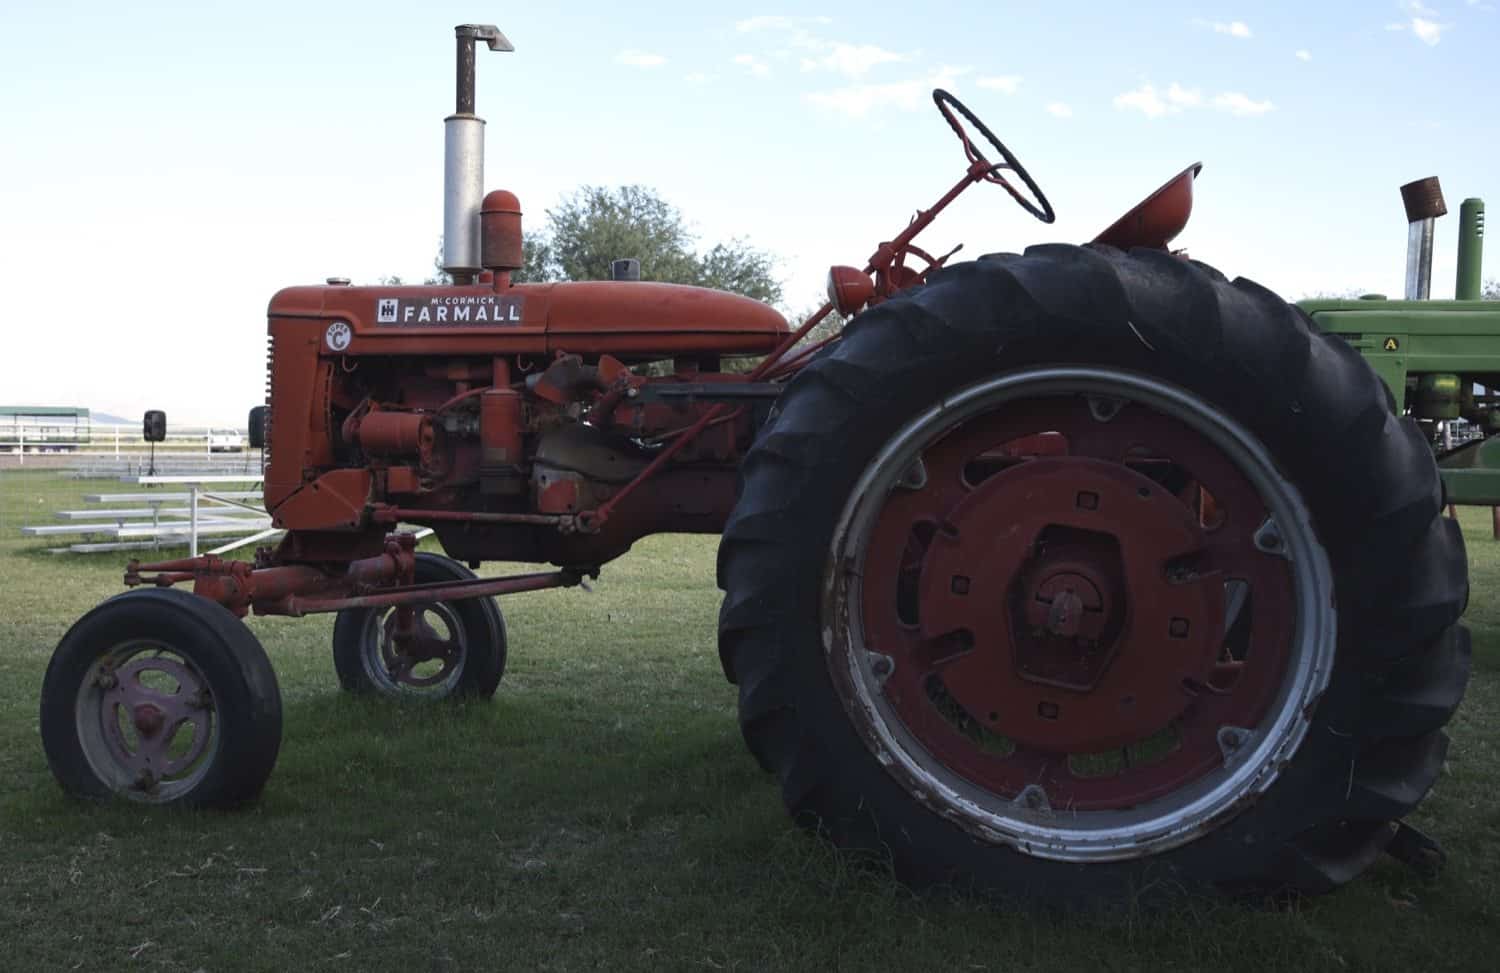 mccormick farmall tractor at Marana Pumpkin Patch & Farm Festival